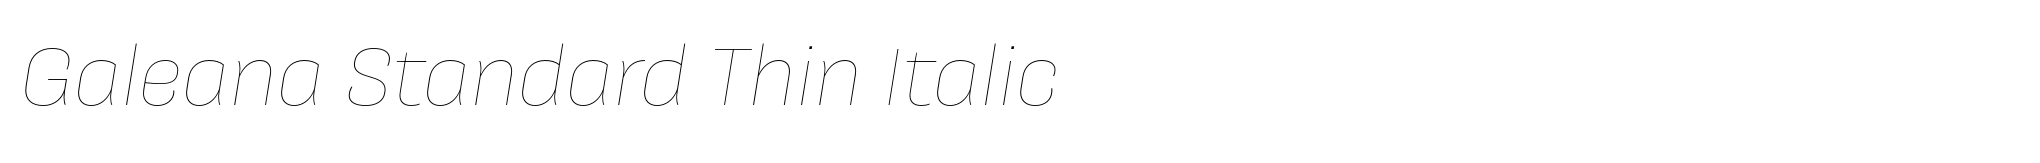 Galeana Standard Thin Italic image